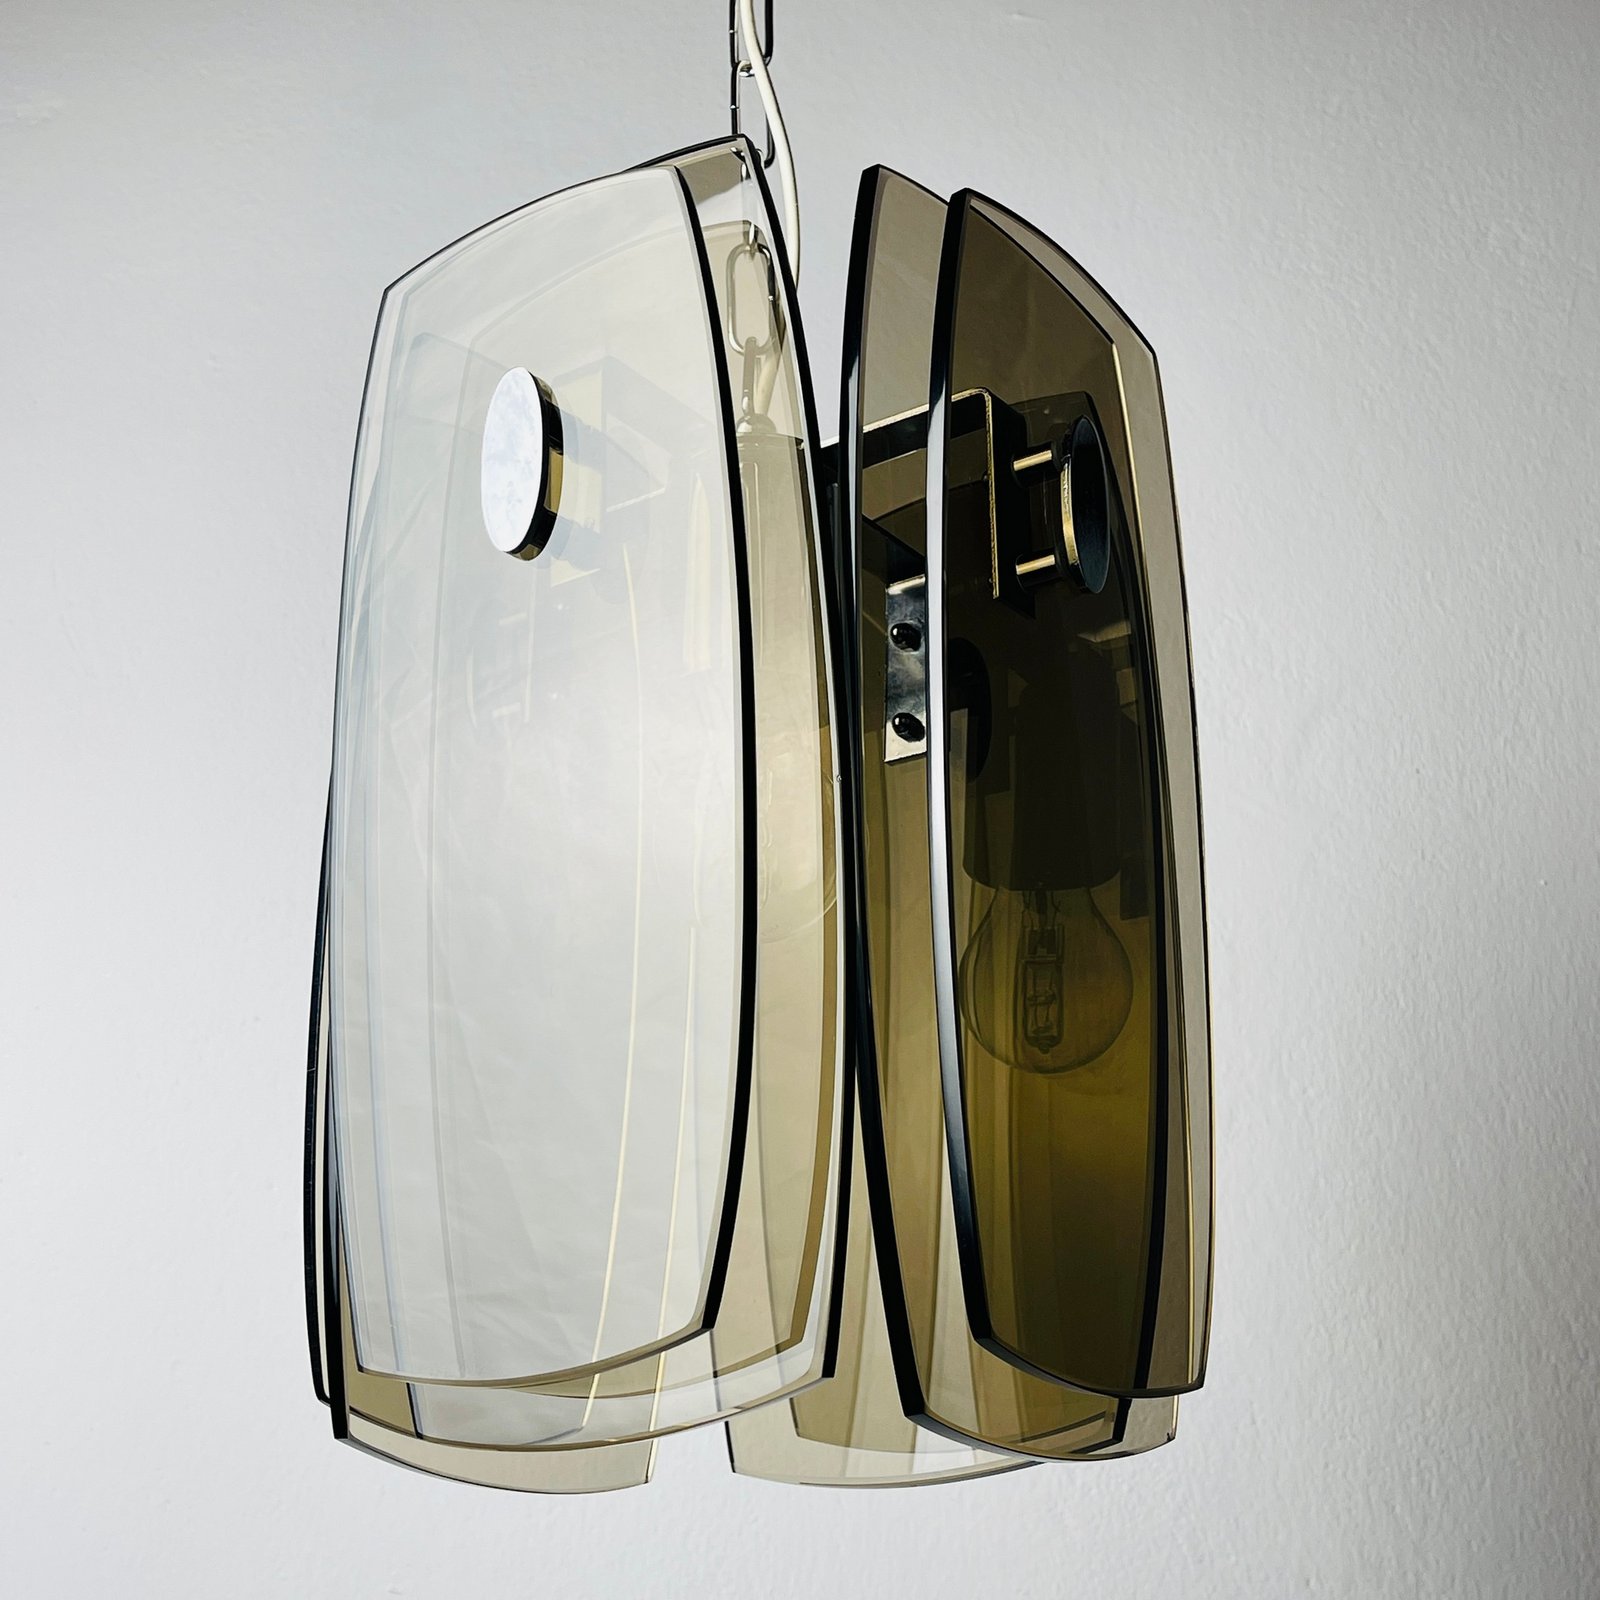 Vintage art glass pendant lamp italian design by Fontana Arte Italy 80s Art deco MCM mid-century ceiling lamp